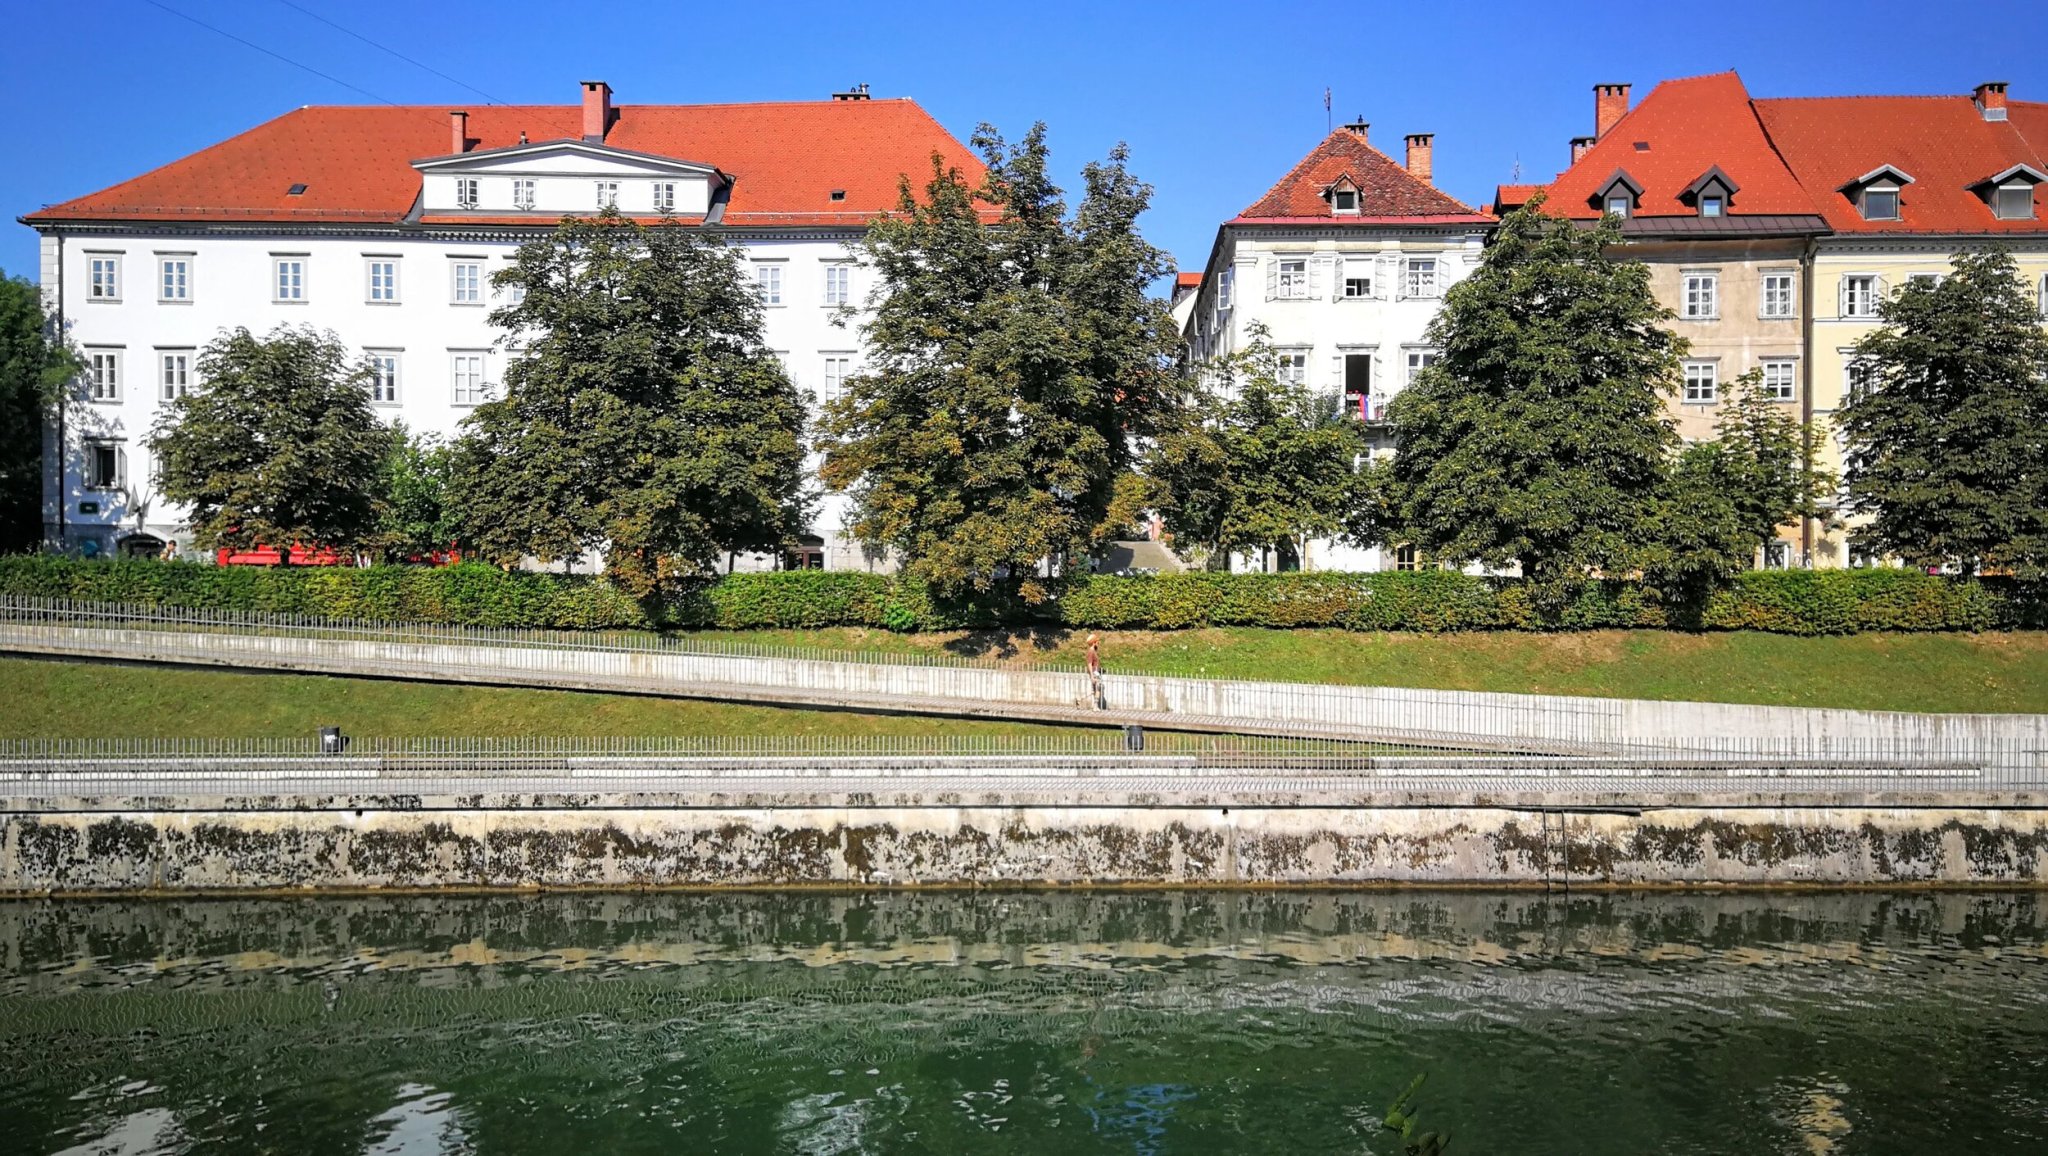 Zois Palace and Križevniška in Ljubljana